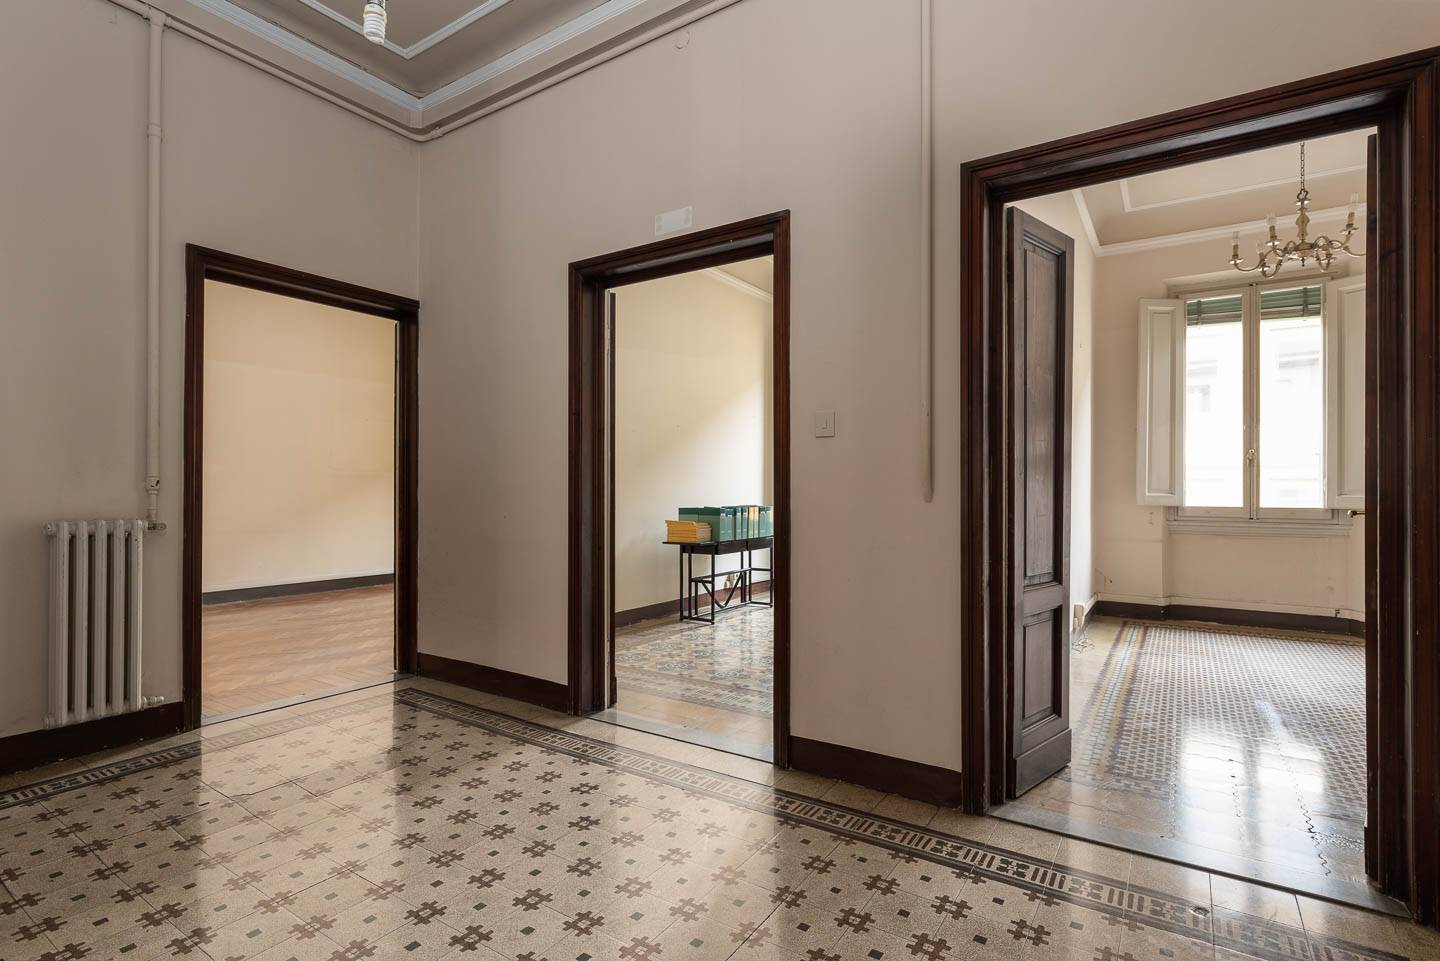 Appartamento da ristrutturare in zona Libertà, Savonarola a Firenze